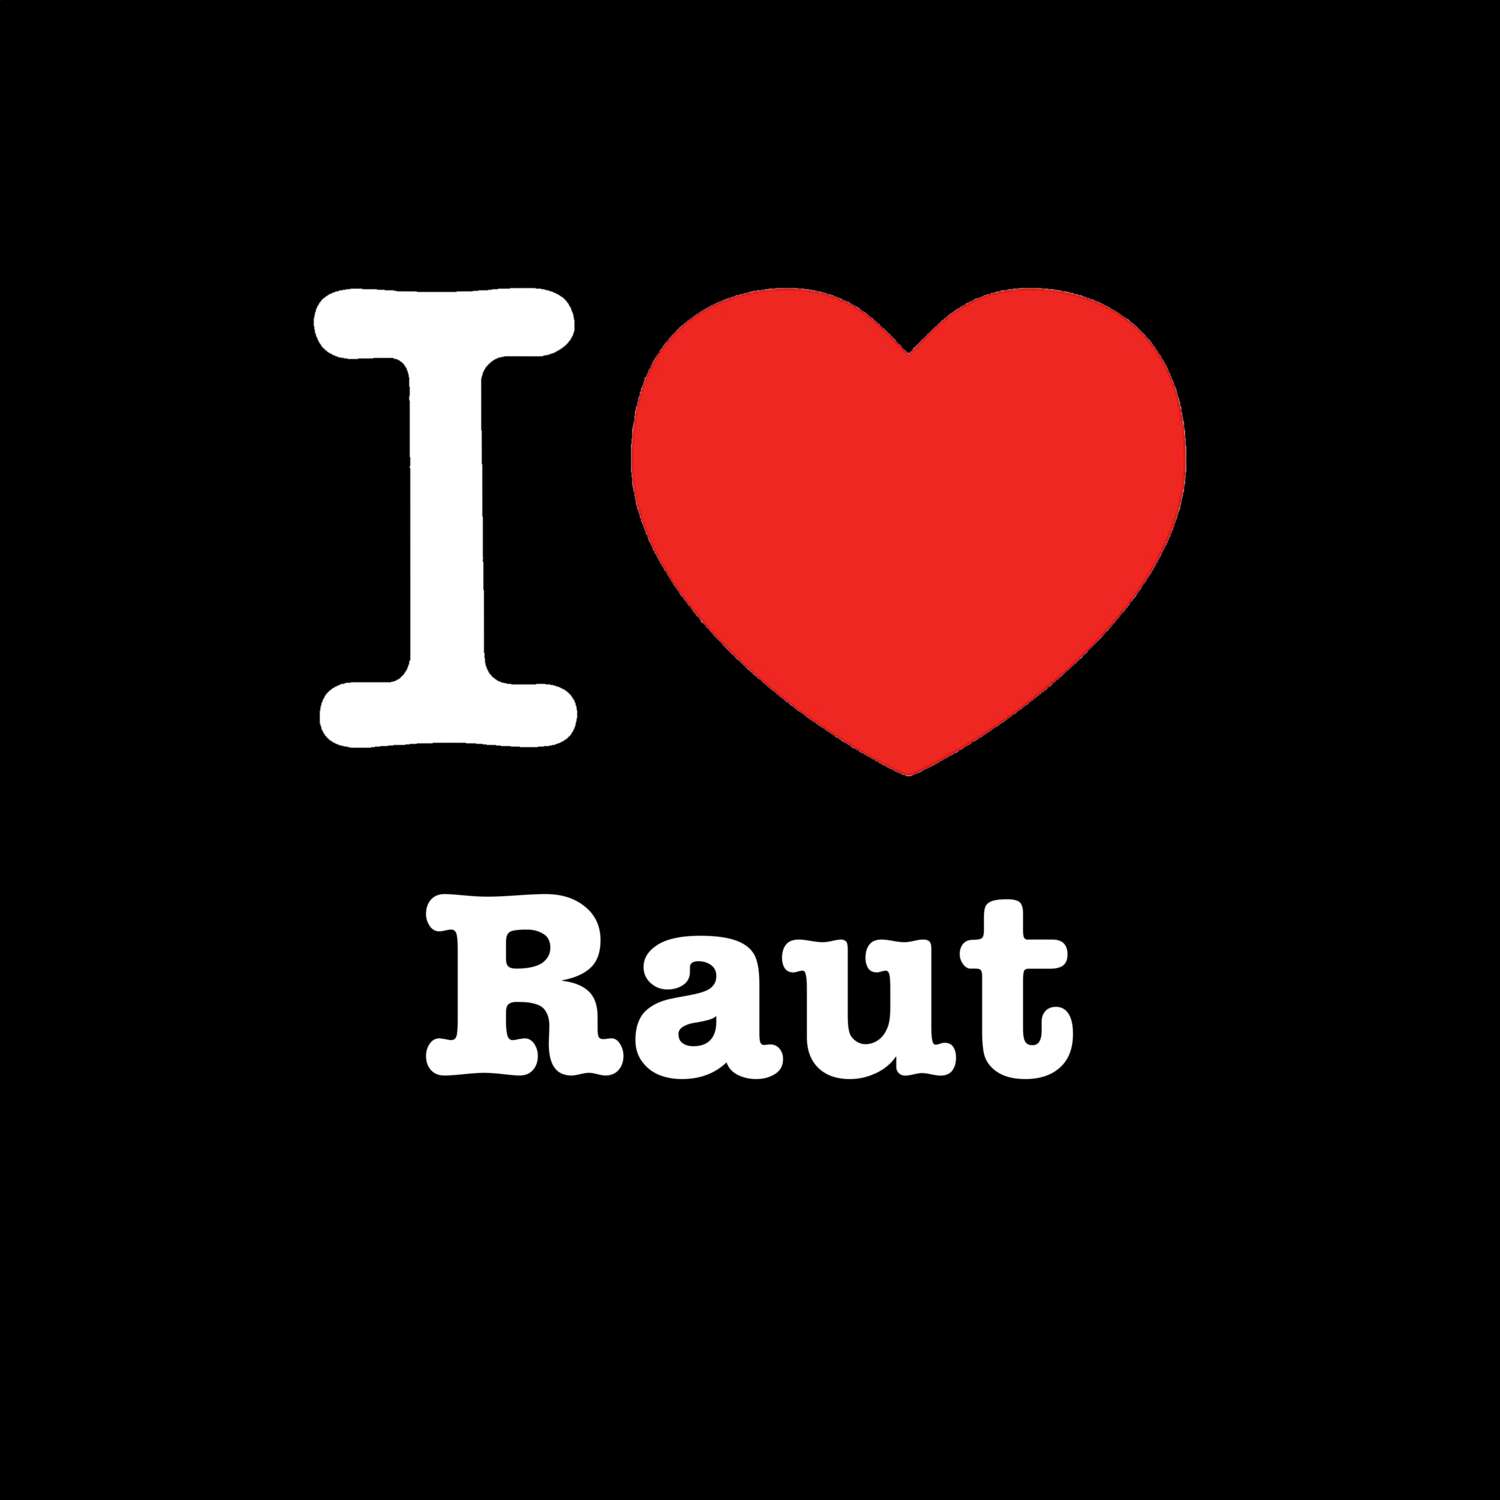 Raut T-Shirt »I love«